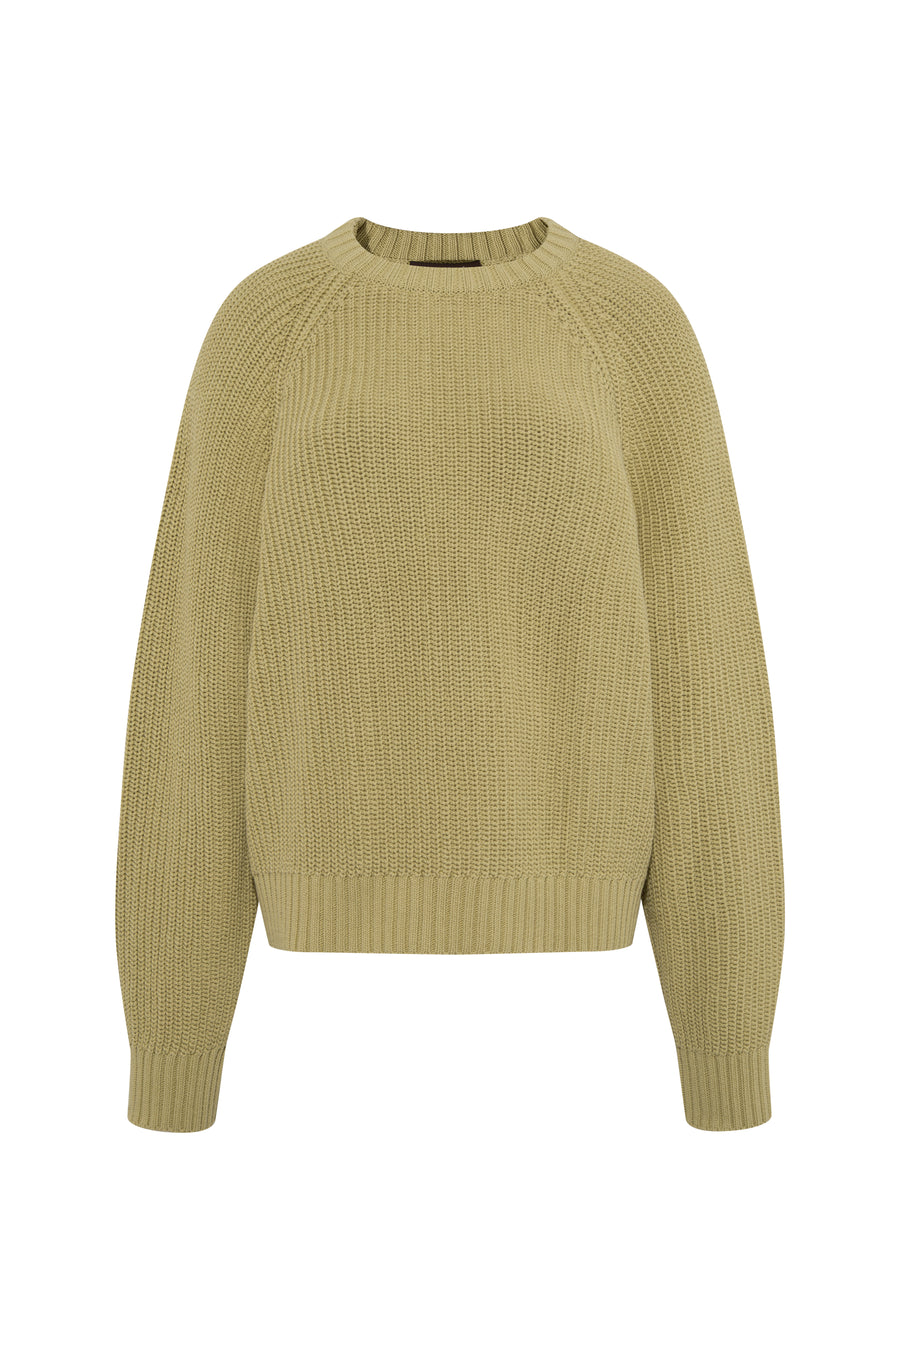 DUZY - Crew neck cotton knit sweater with logo detail